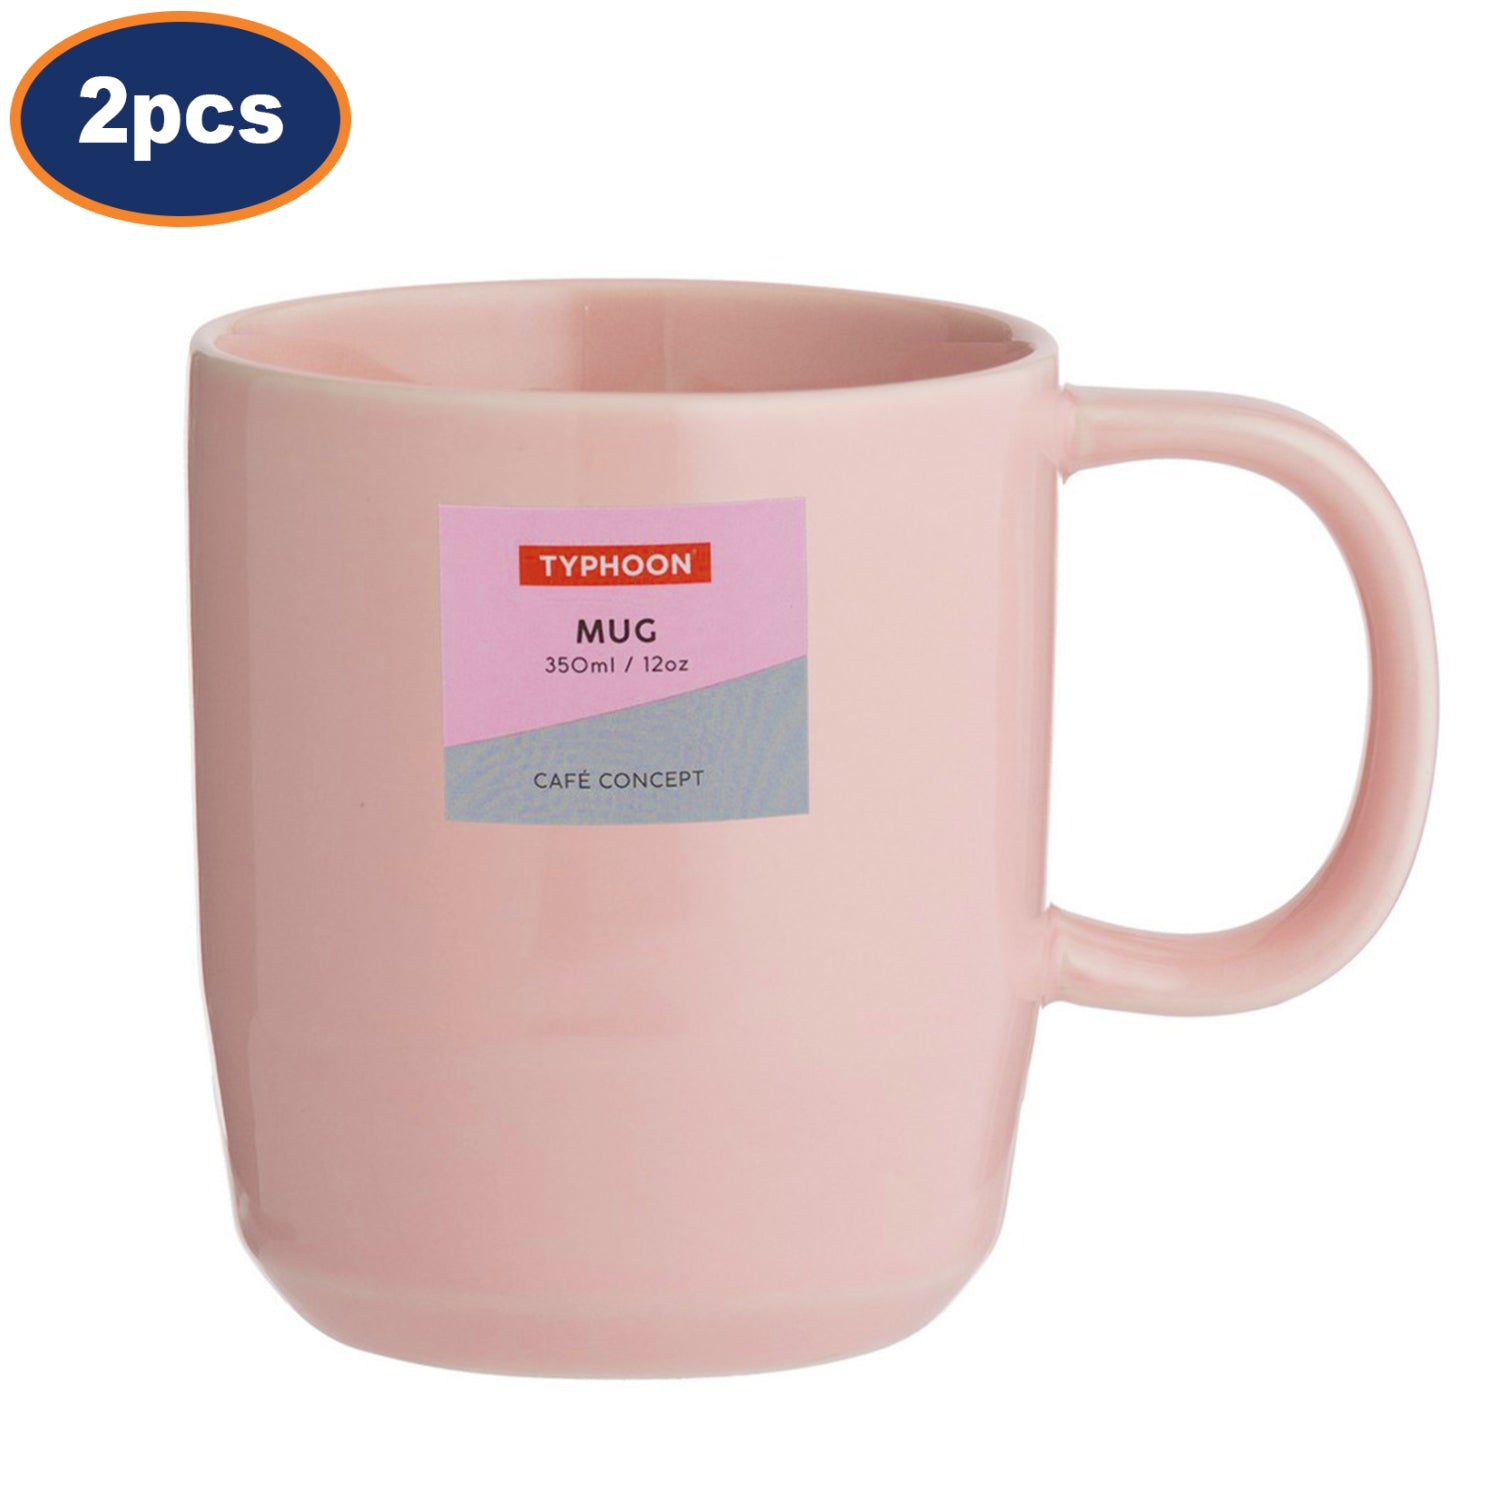 2Pcs Typhoon Cafe Concept 350ml Pink Mug